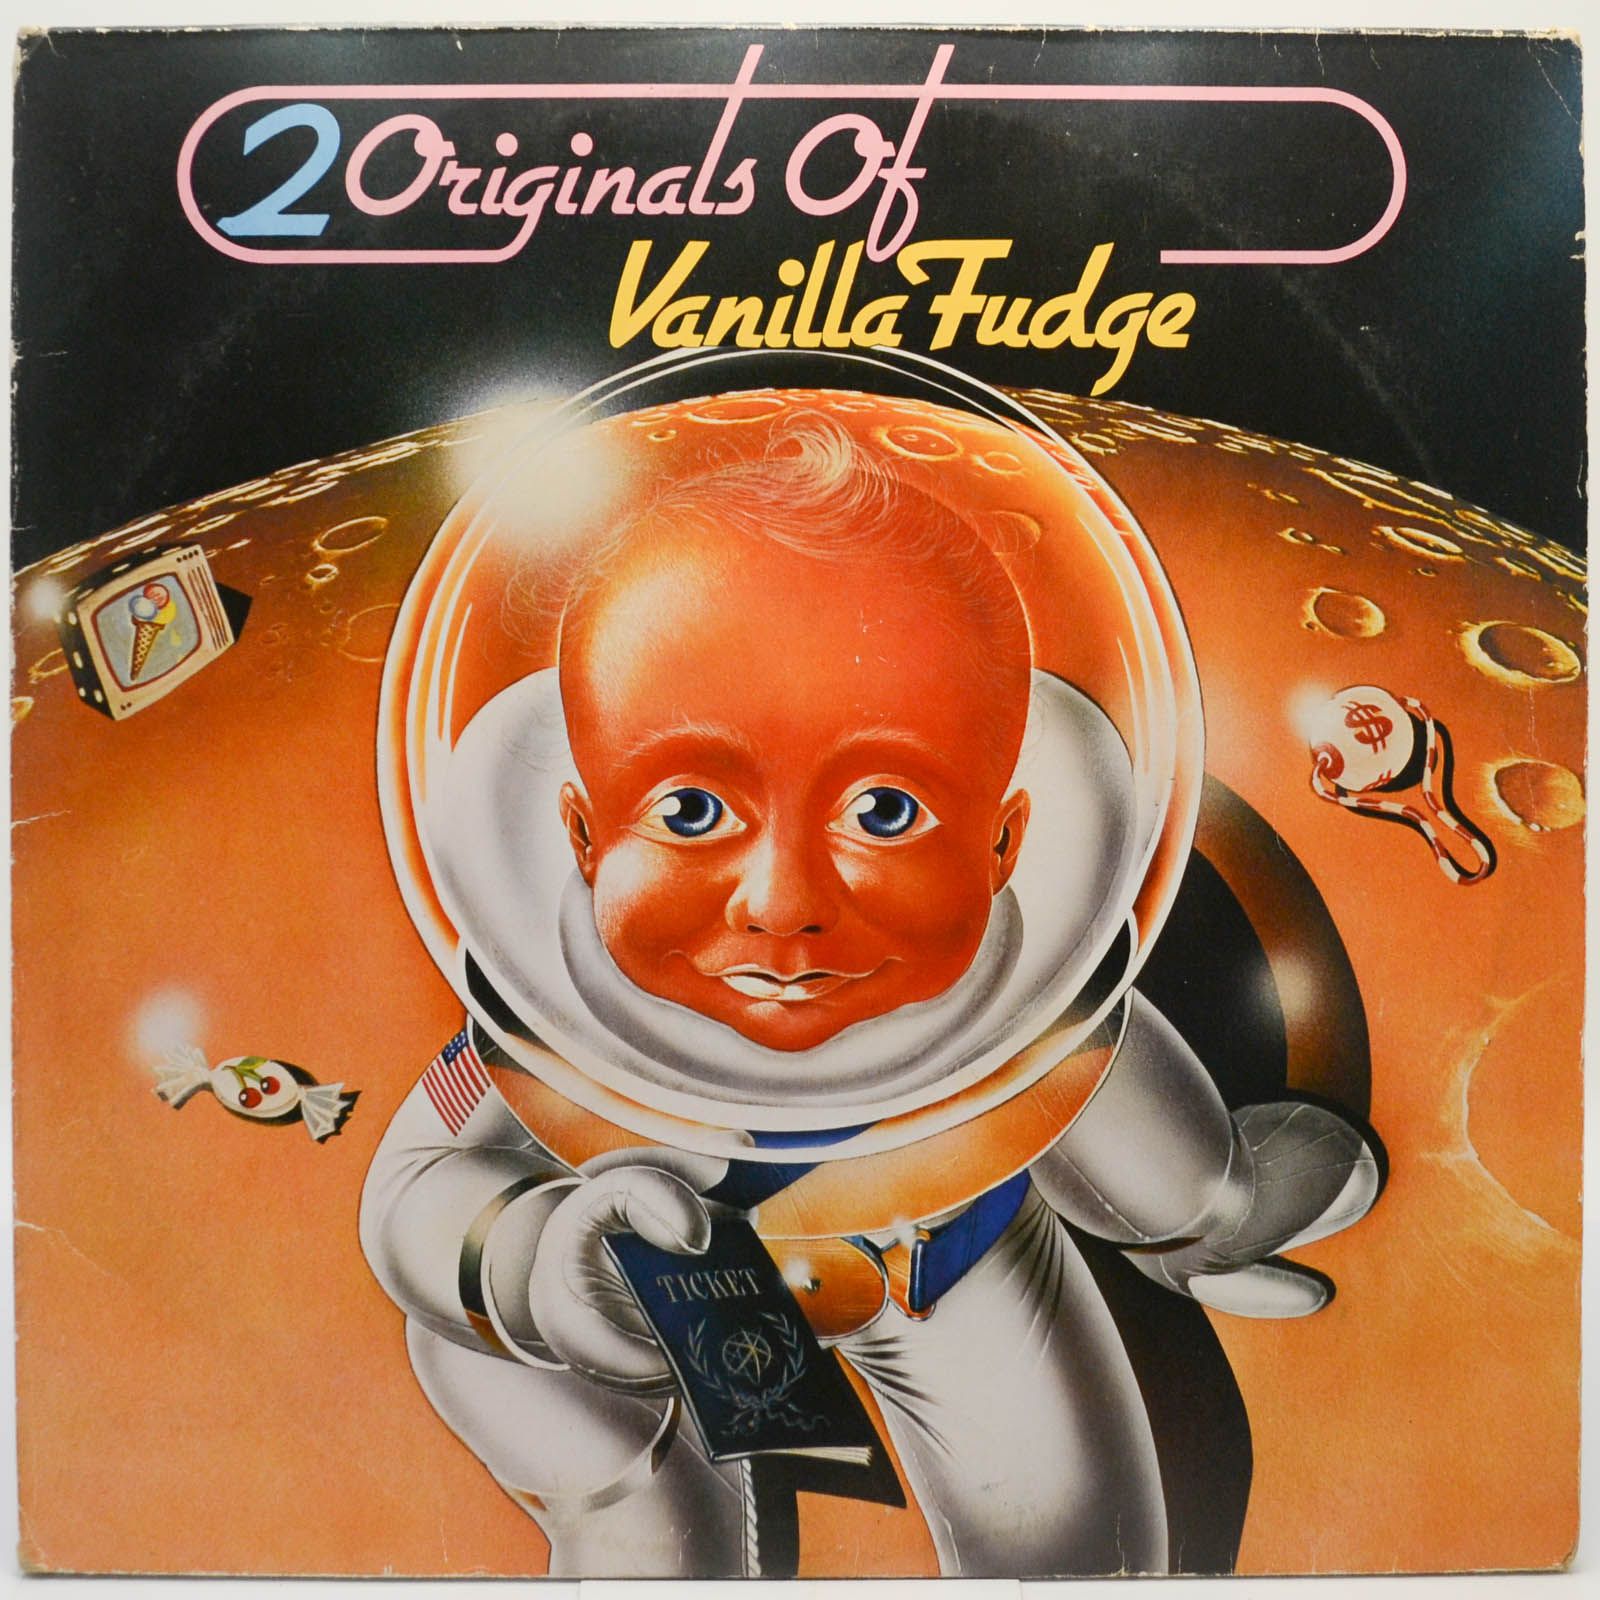 Vanilla Fudge — 2 Originals Of Vanilla Fudge (2LP), 1976